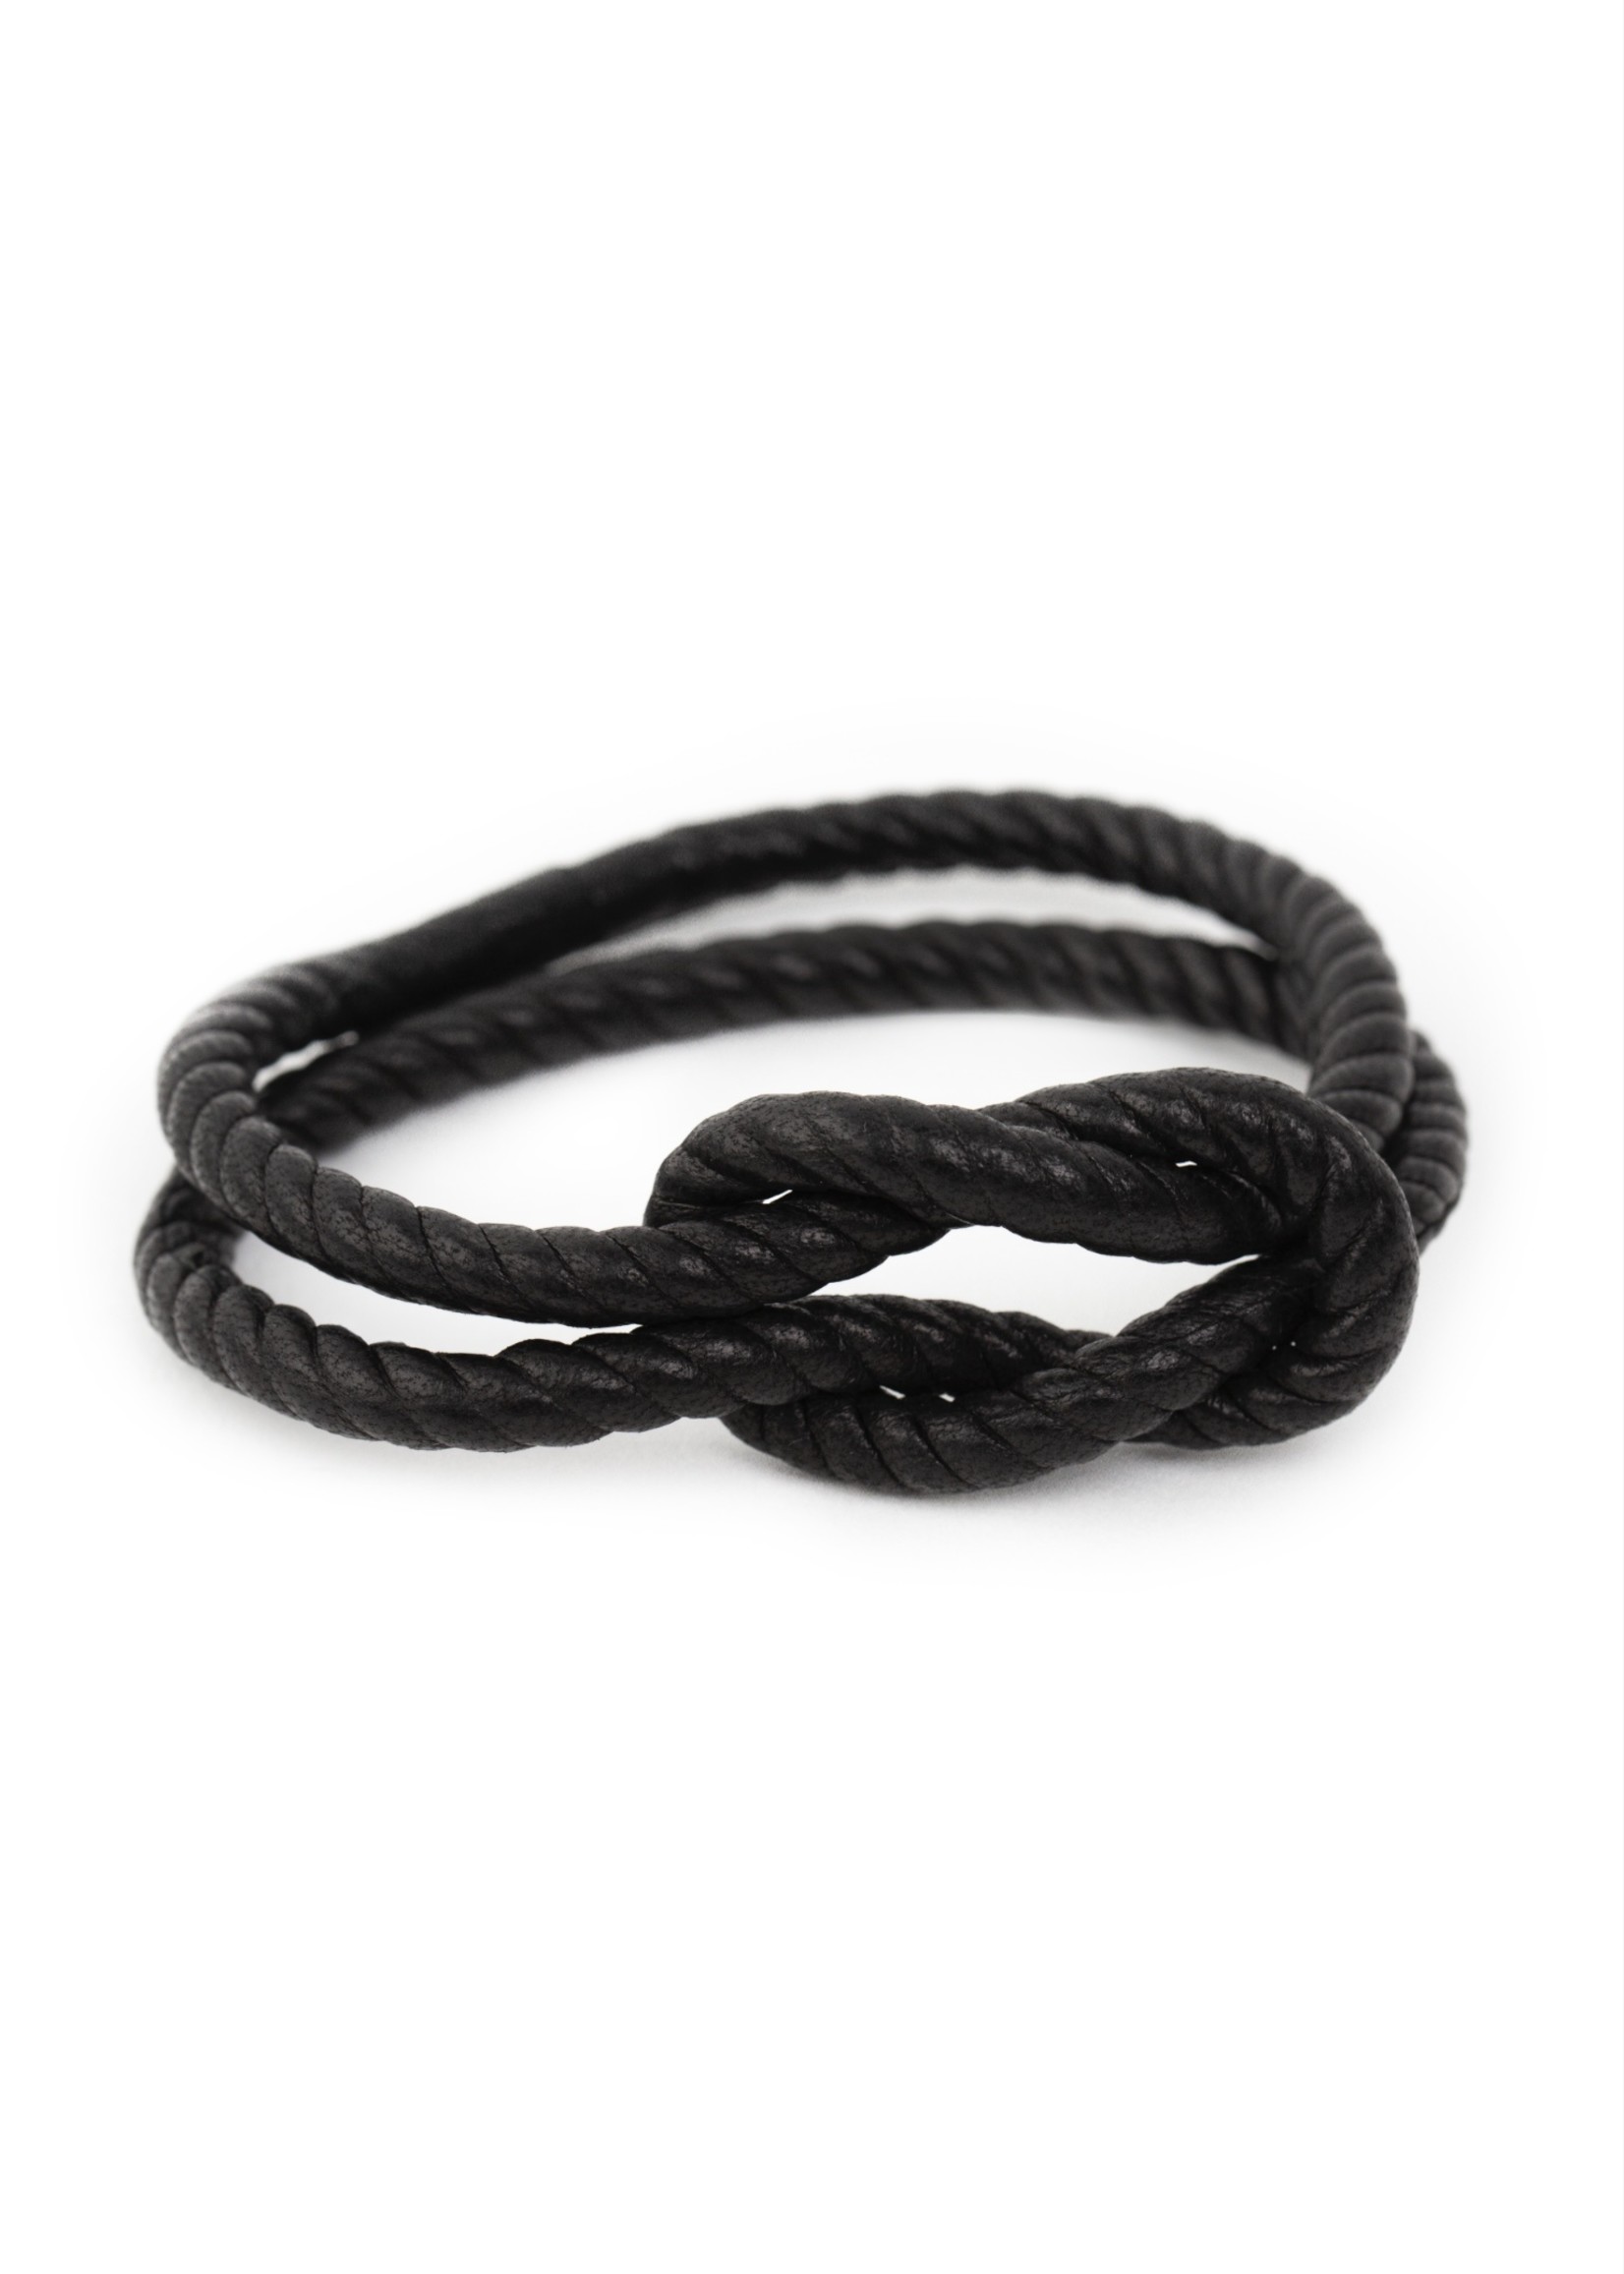 NATALIA BRILLI Leather Wrapped Rope Bracelet